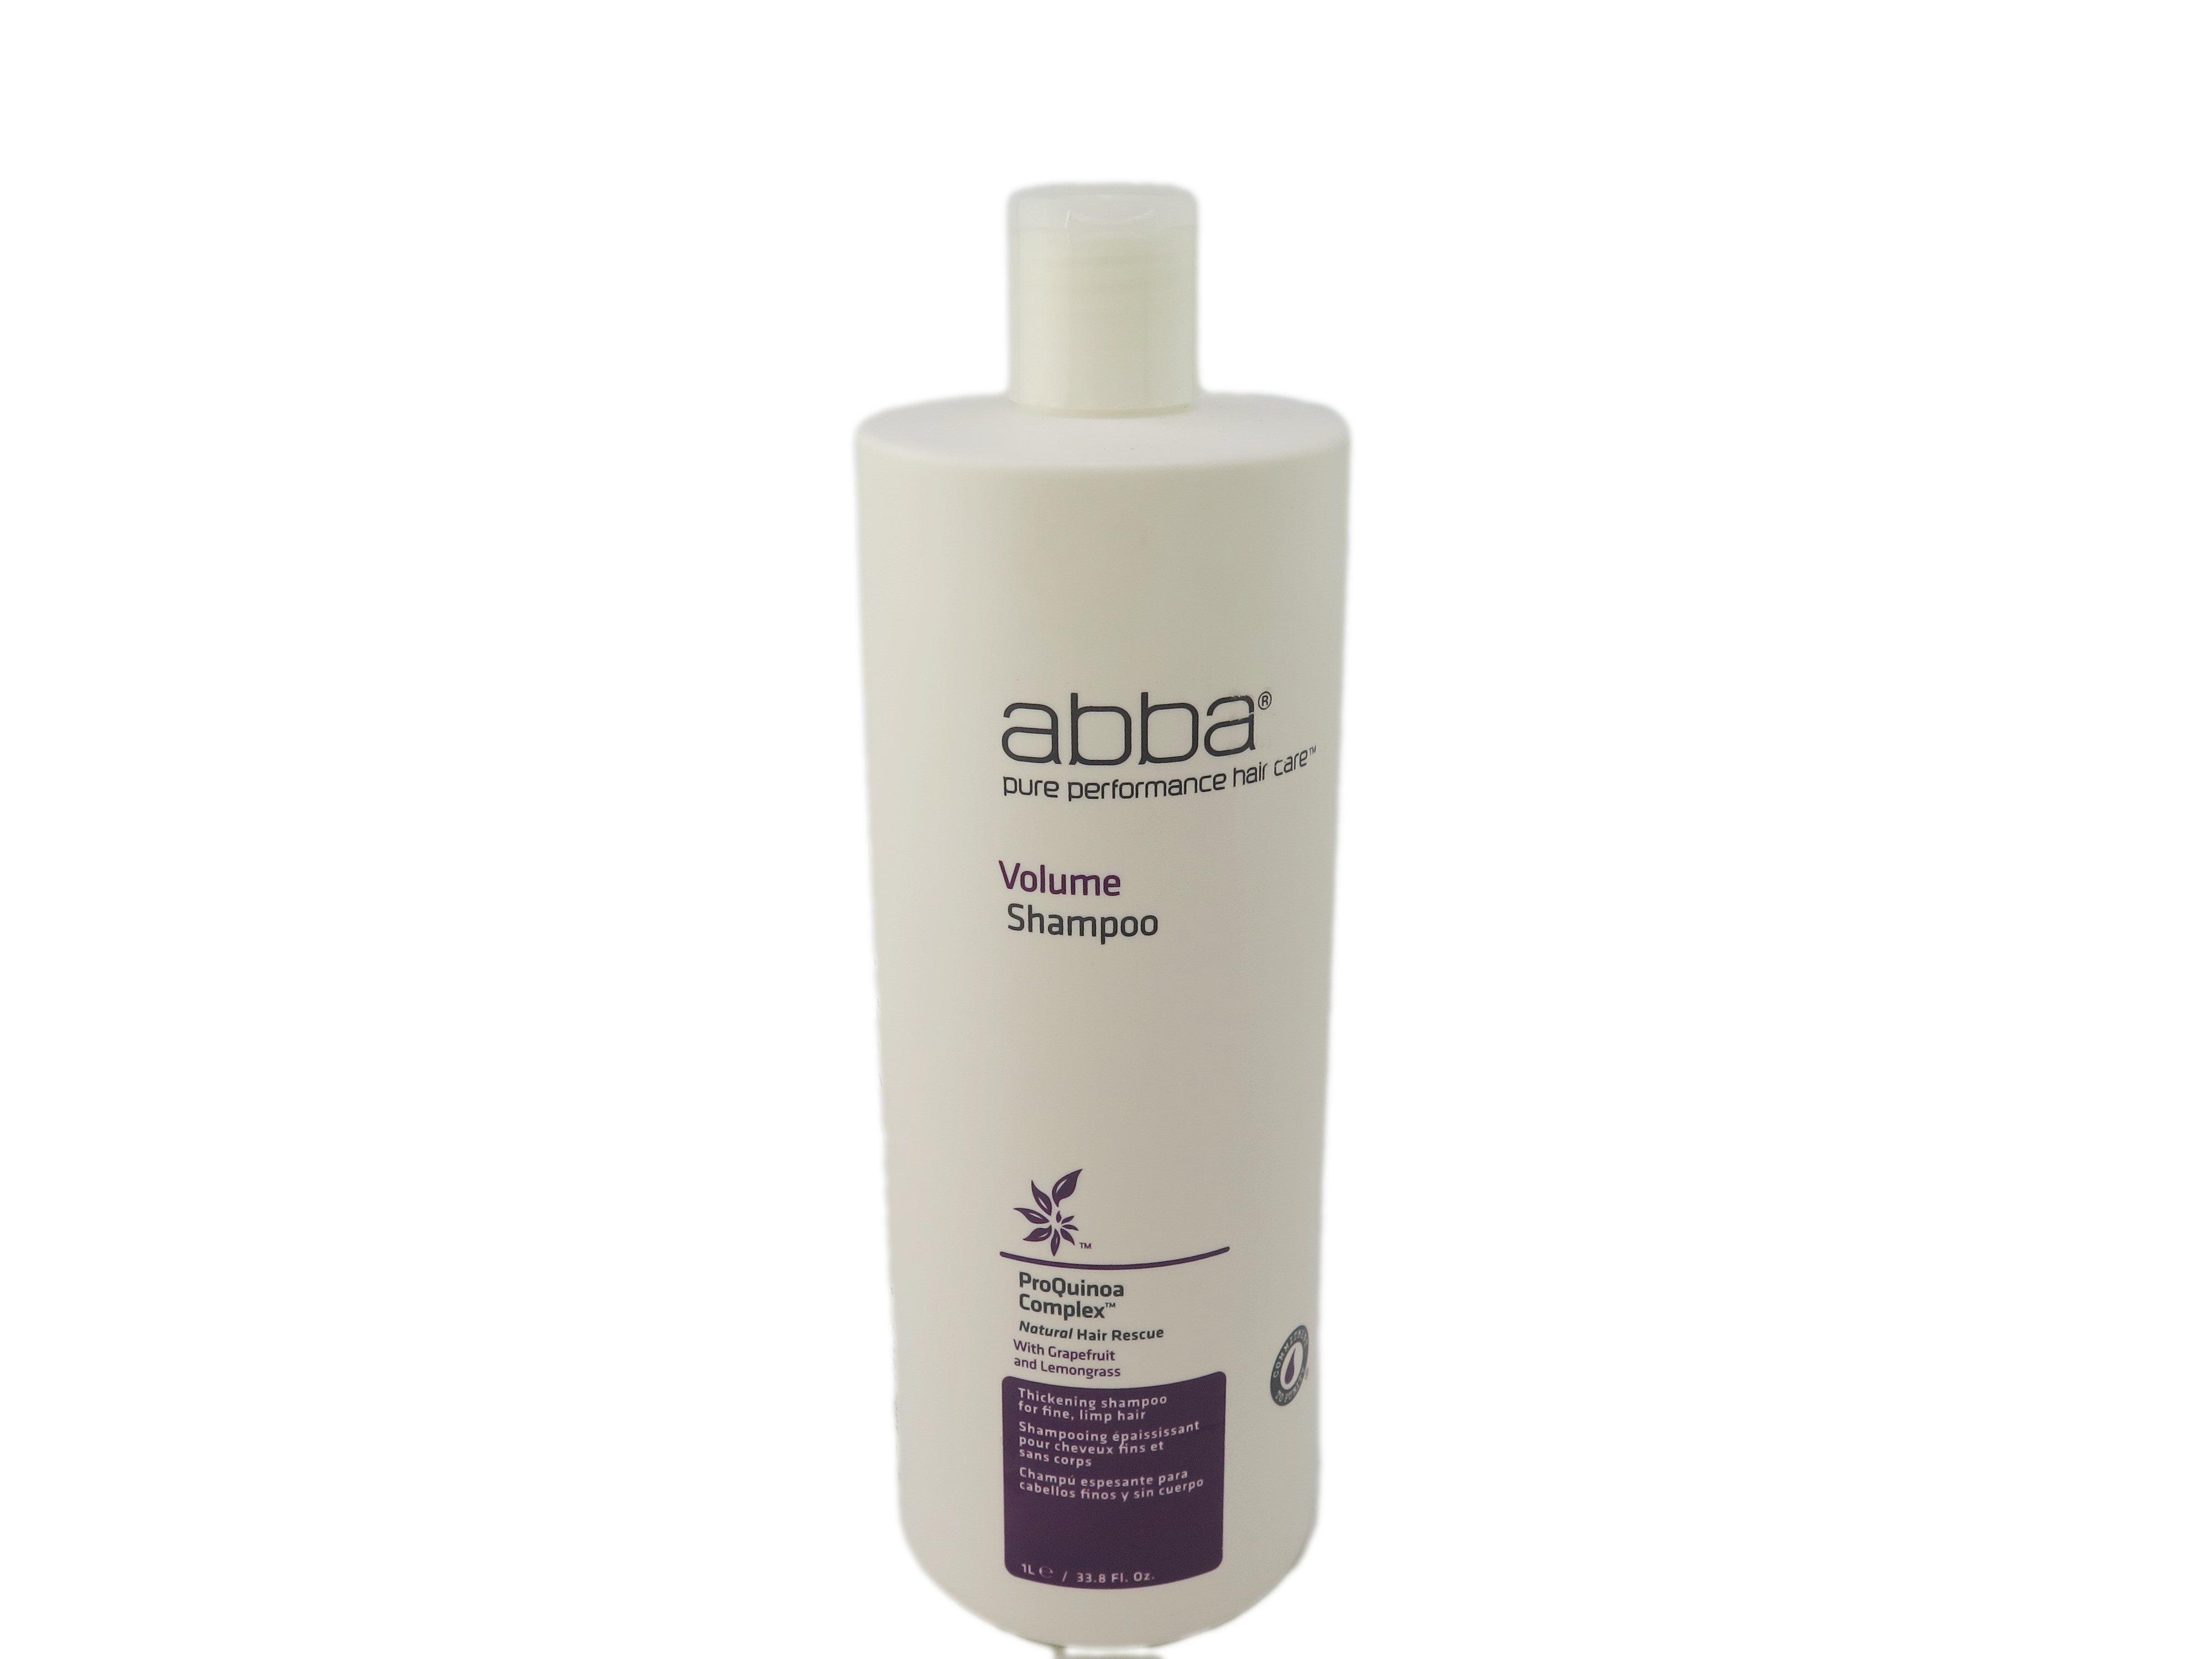 Abba ProQuinoa Complex Volumizing Shampoo 33.8 fl oz